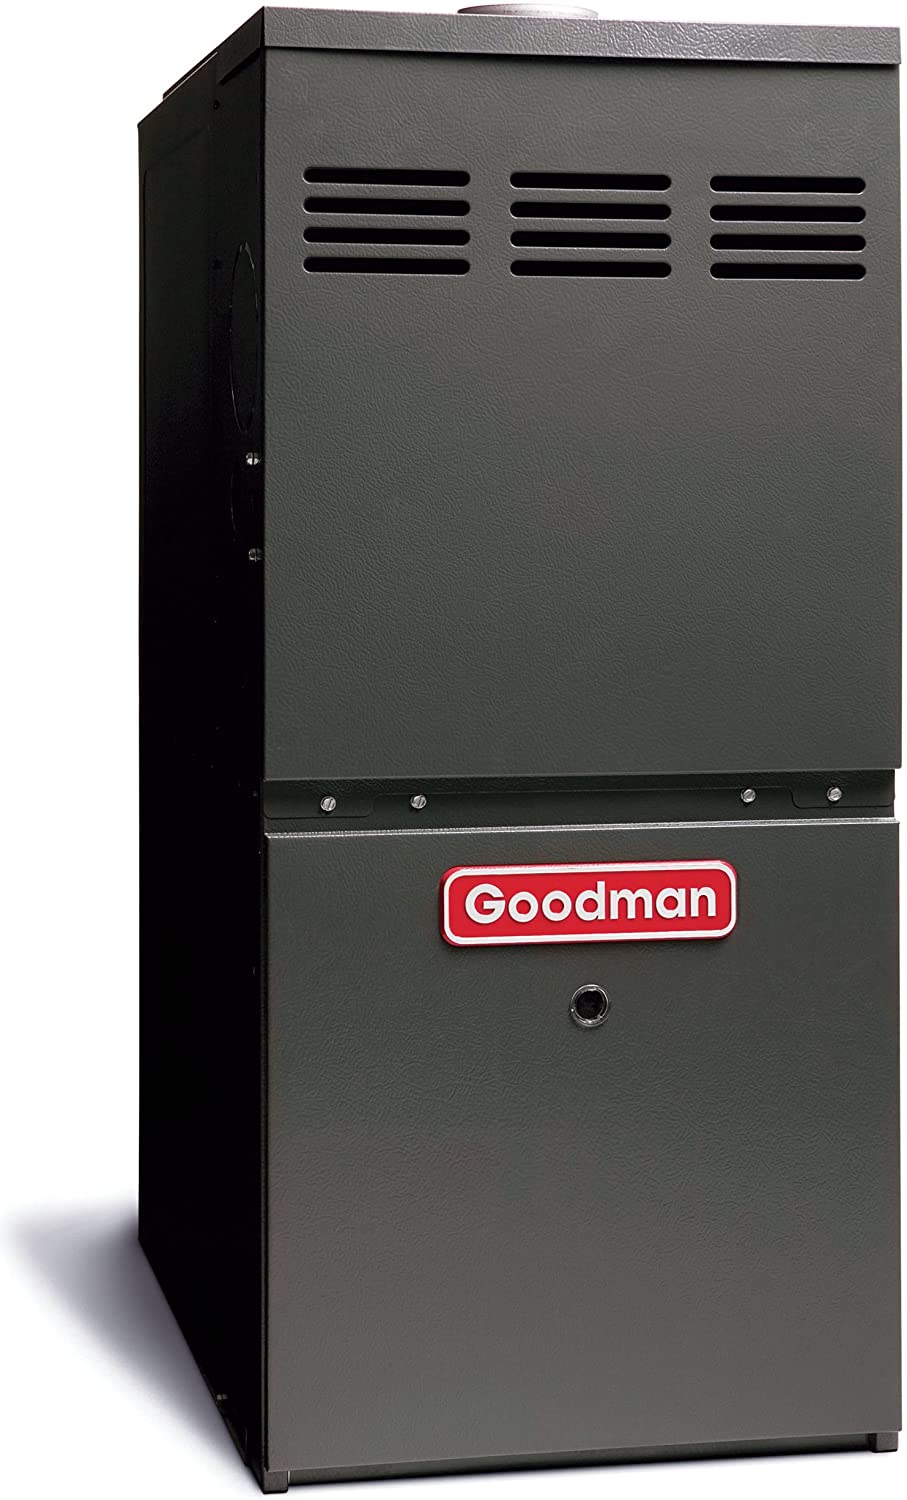 Goodman furnace isolated on white background.